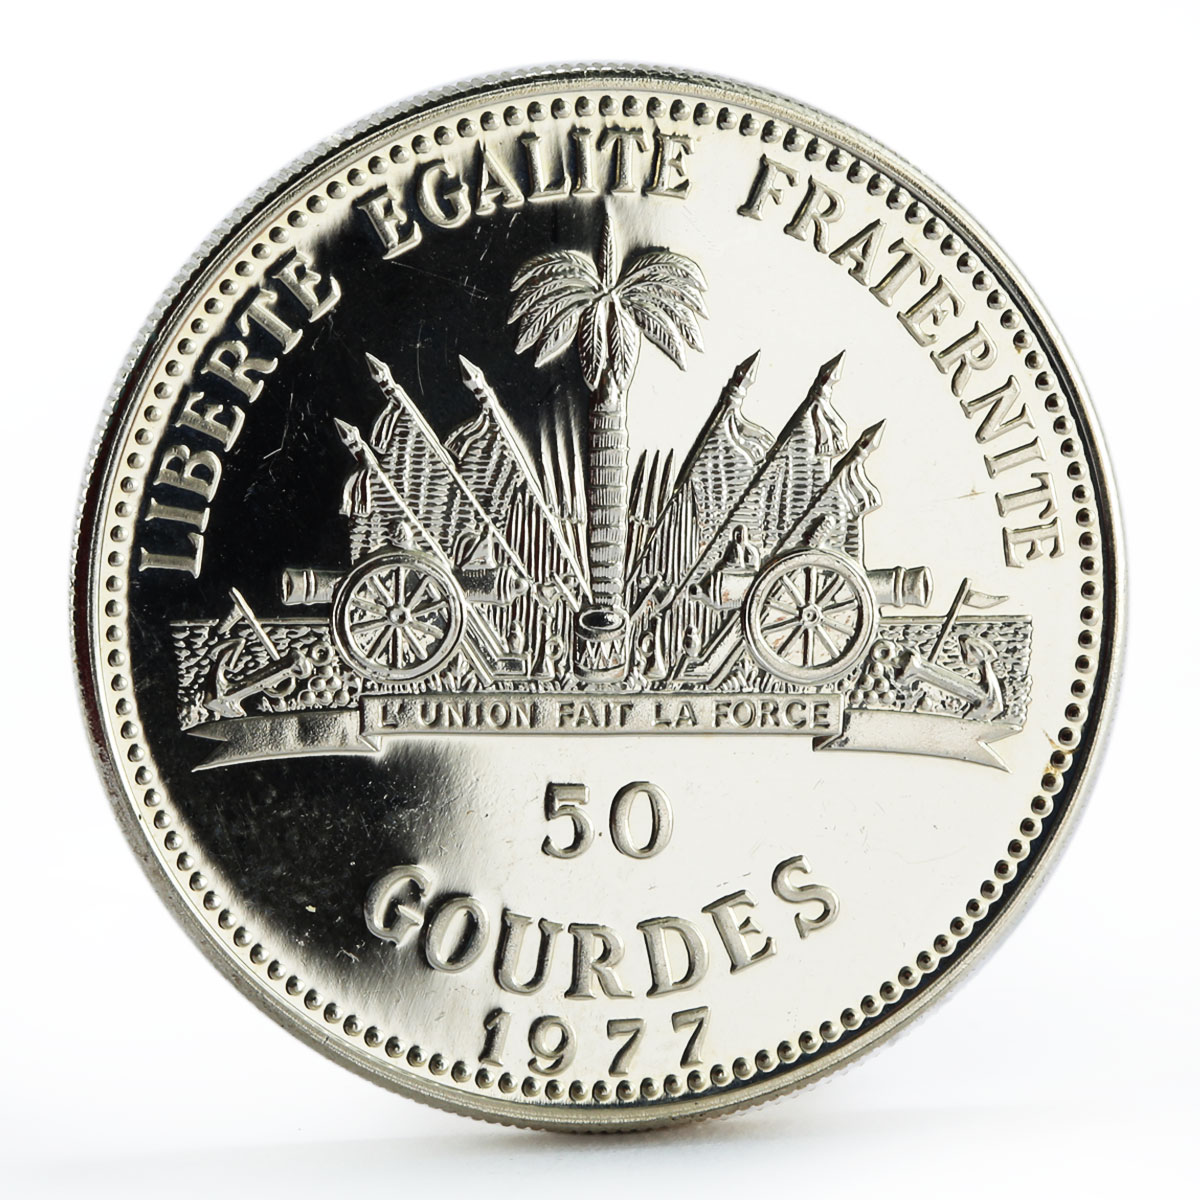 Haiti 50 gourdes 20th Anniversary of European Market Economy silver coin 1977